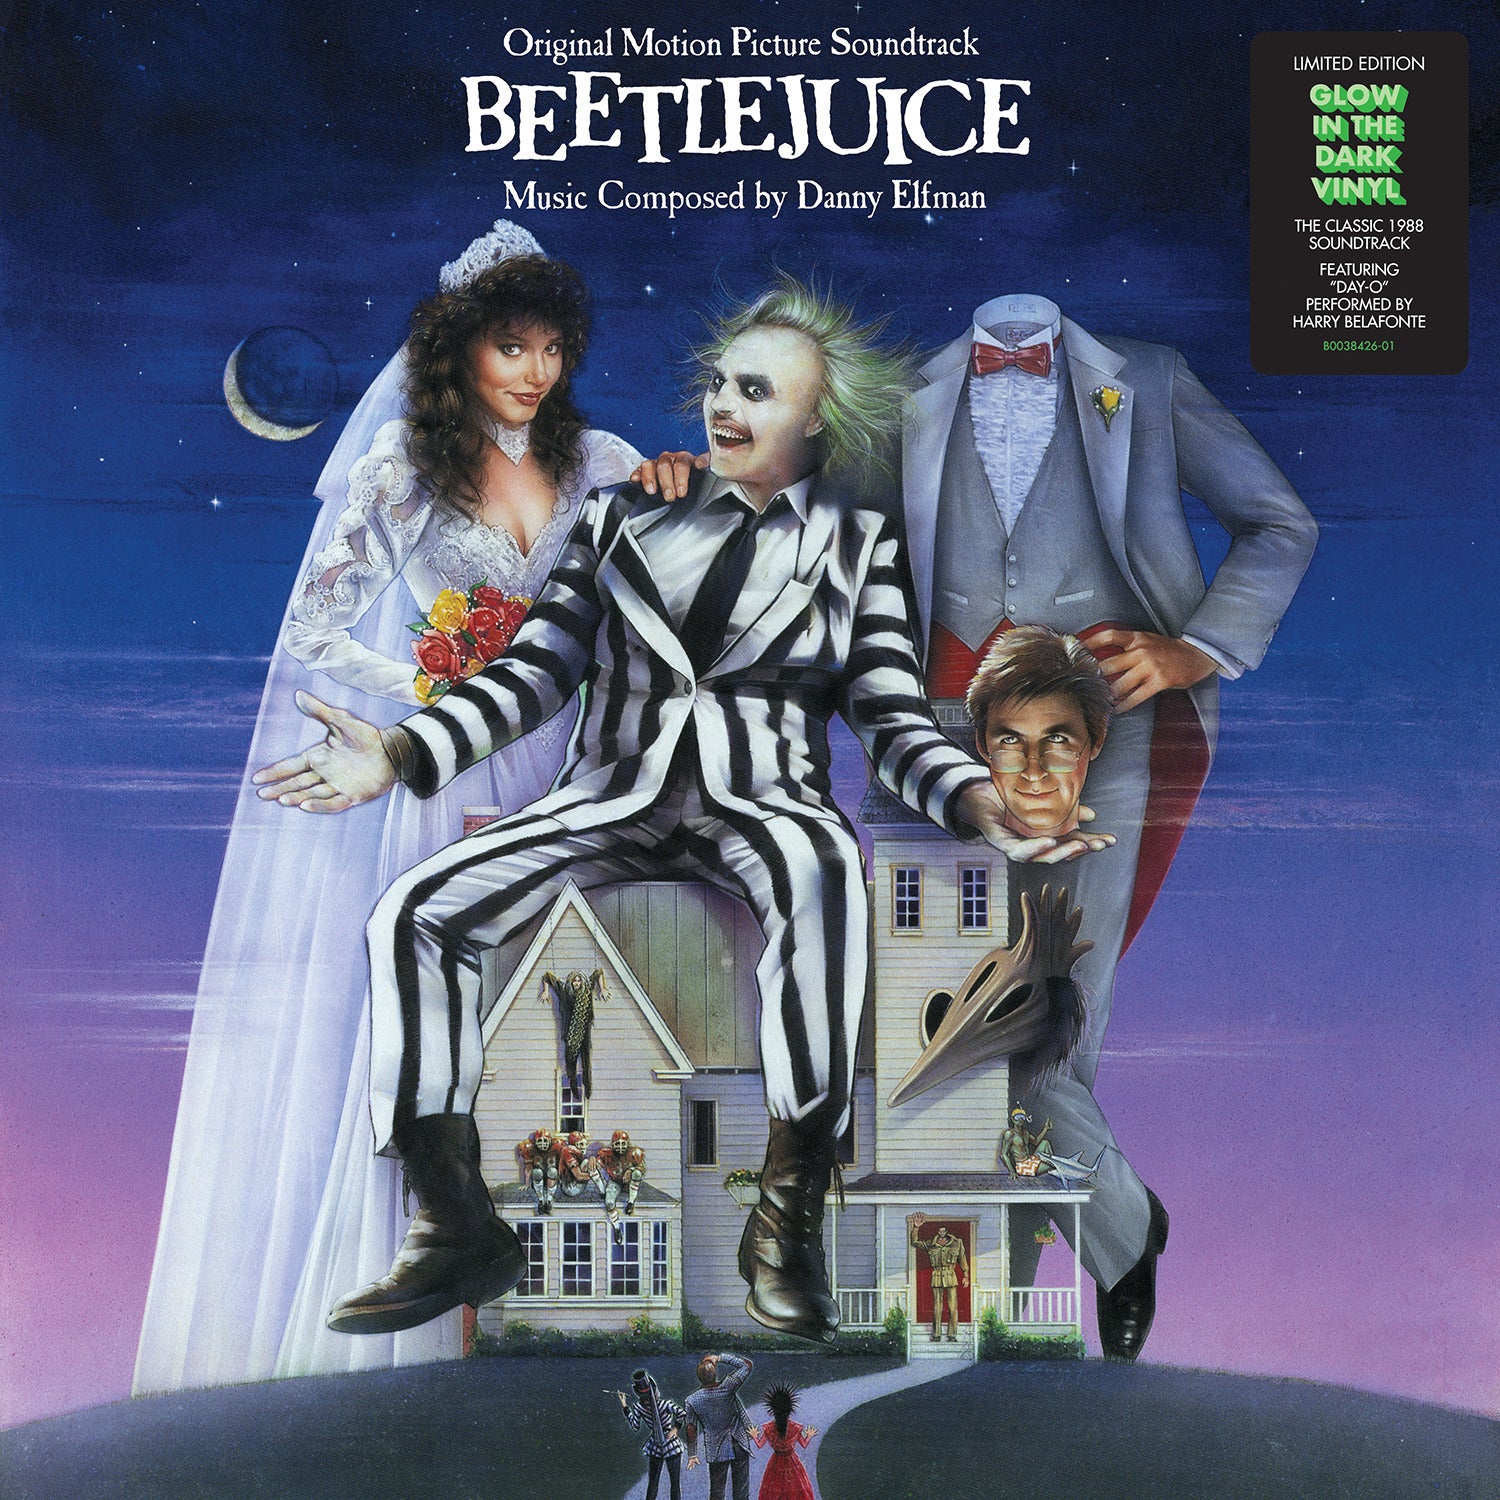 Danny Elfman - Beetlejuice (OST): Limited Glow In The Dark Vinyl LP